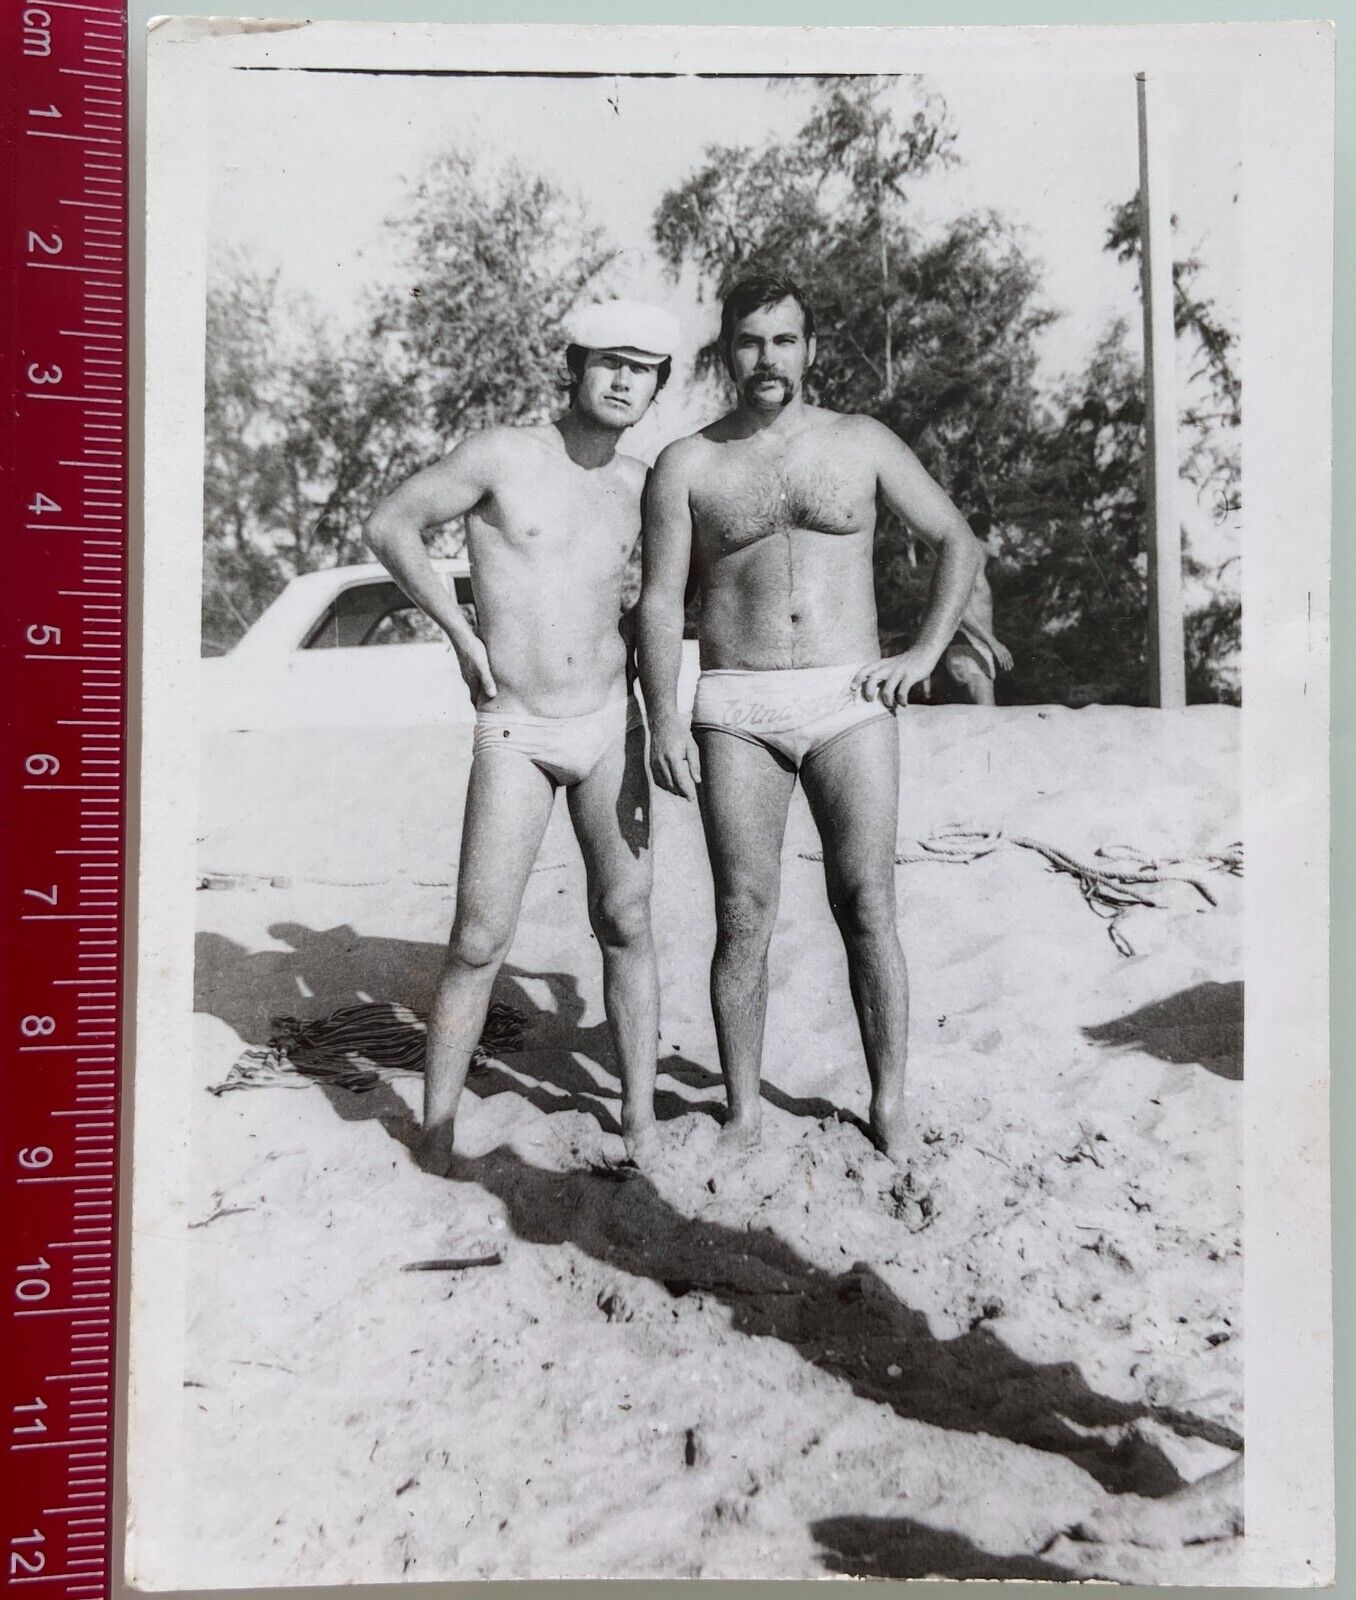 Shirtless Couple Men Trunks Bulge Affectionate Guys Gay Interest Vintage Photo